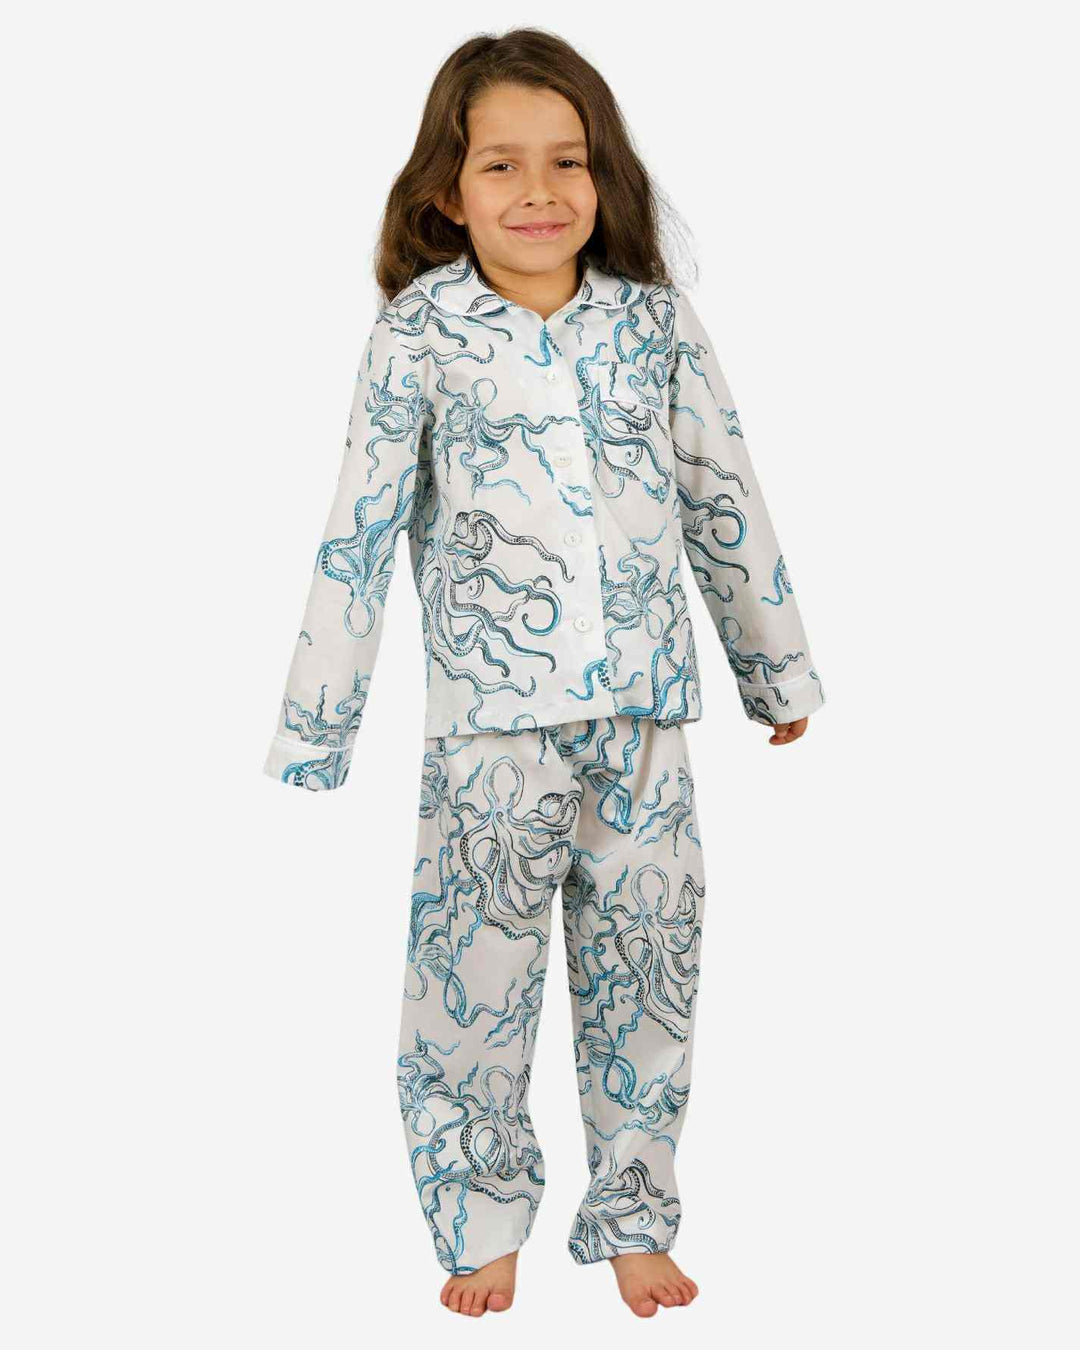 Girls pyjamas - Octopus Indigo